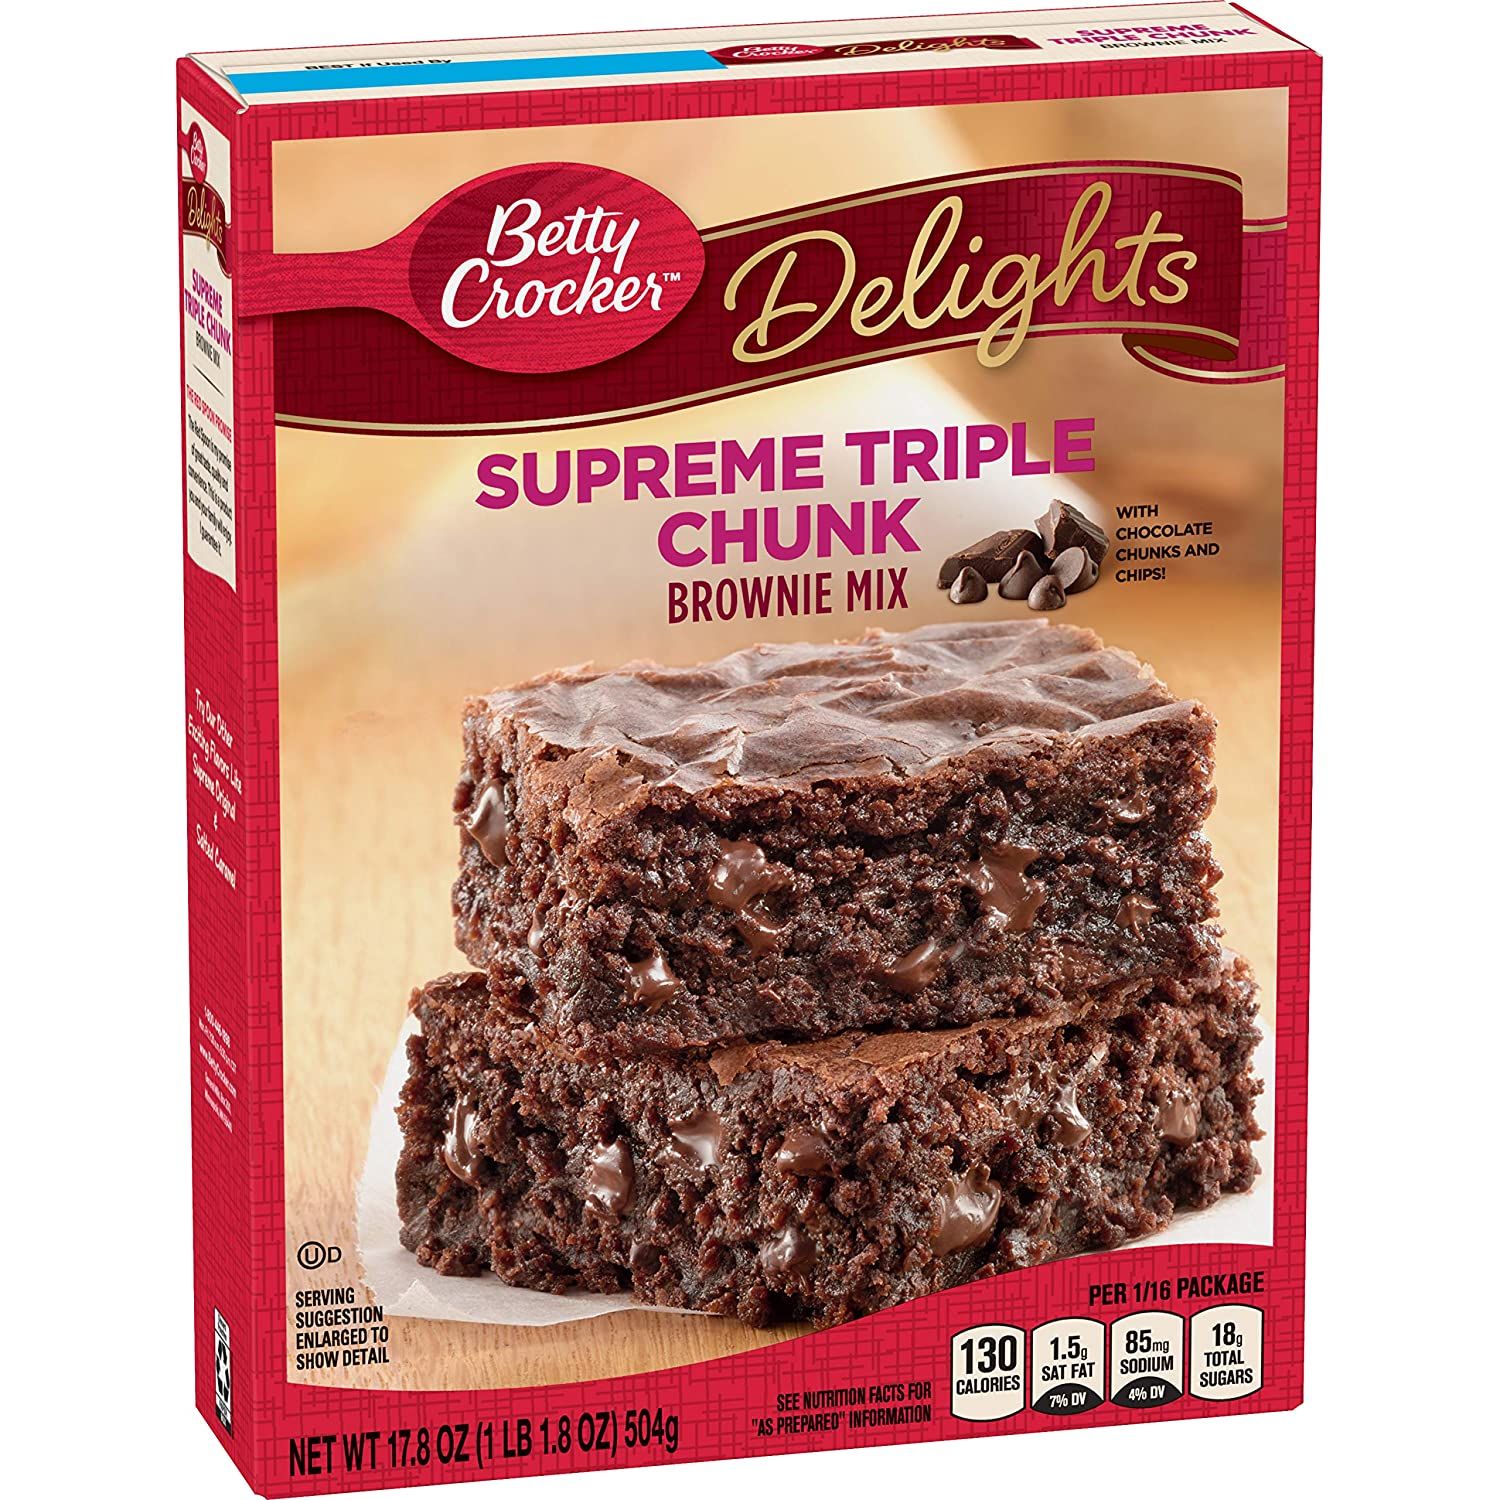 Betty Crocker Delights Supreme Triple Chunk Brownie Mix Image